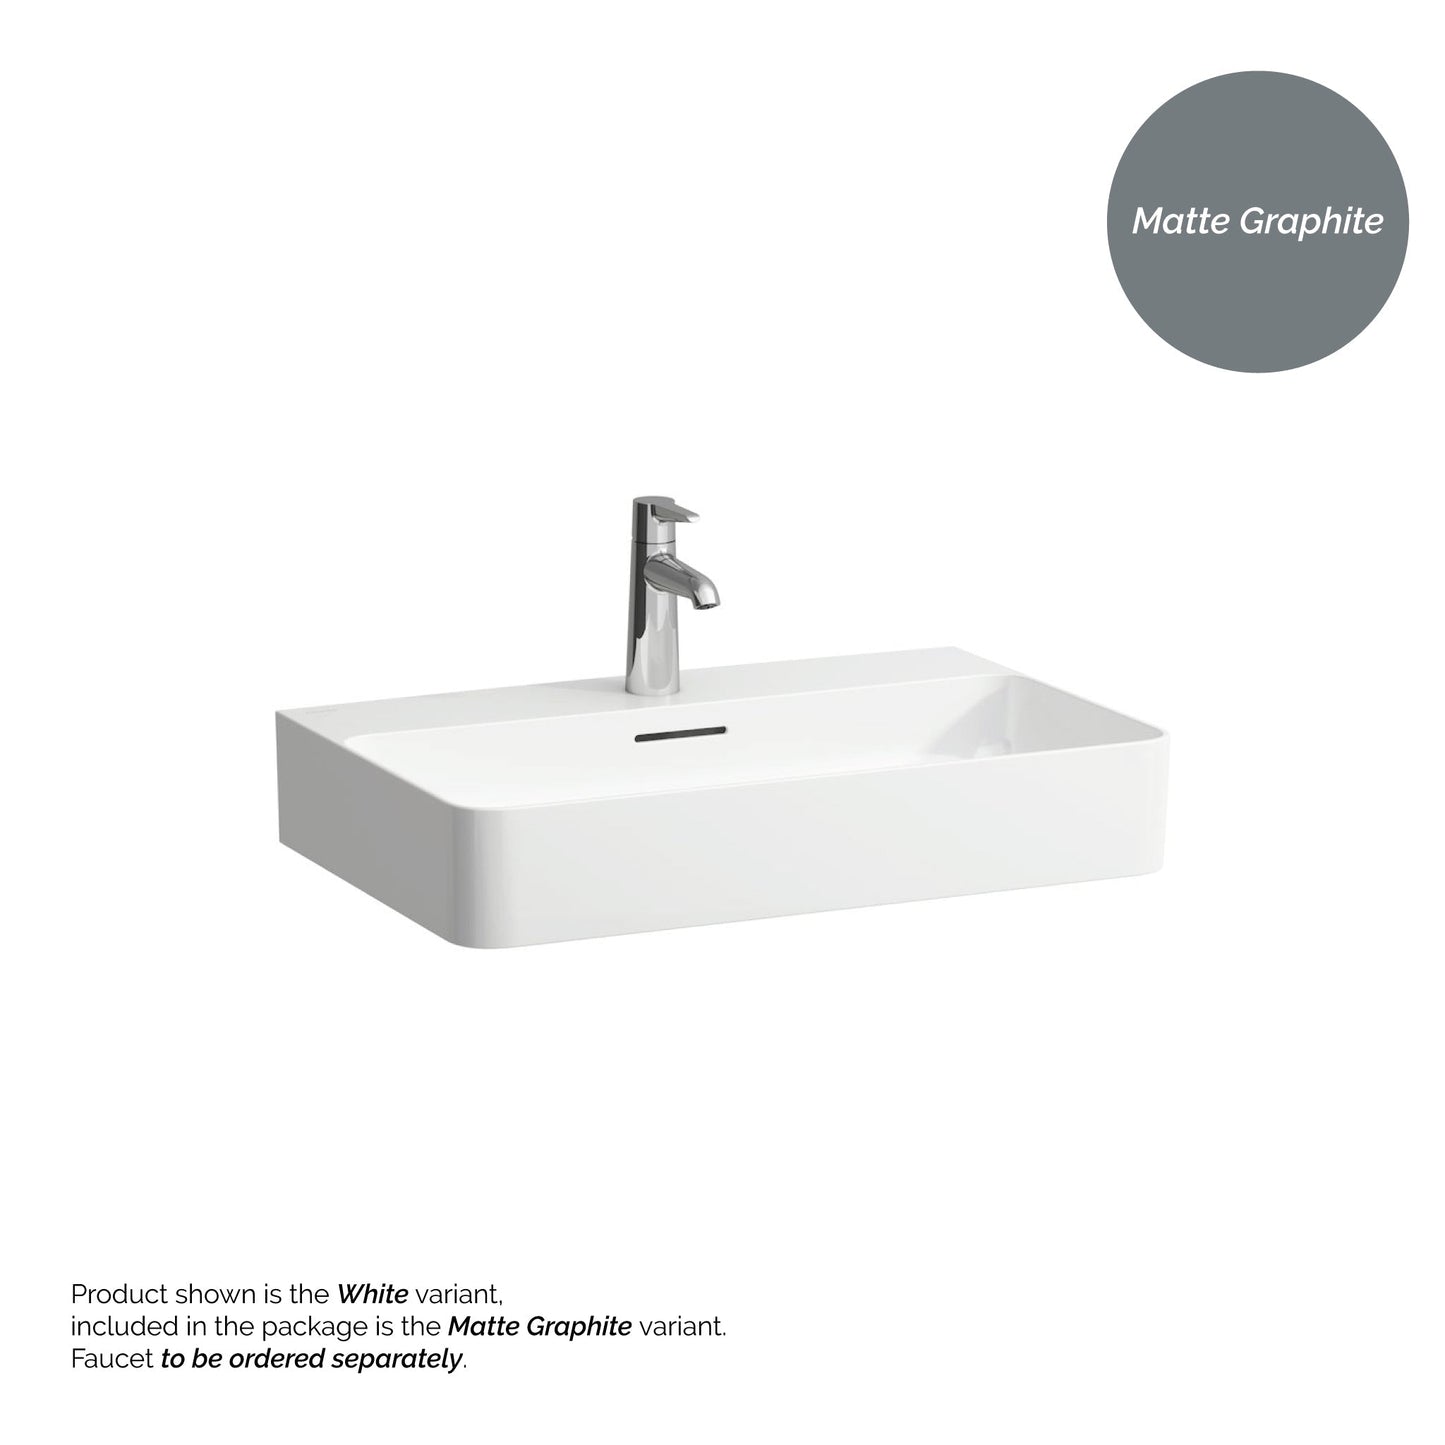 Laufen Val 26" x 17" Matte Graphite Ceramic Countertop Bathroom Sink With Faucet Hole